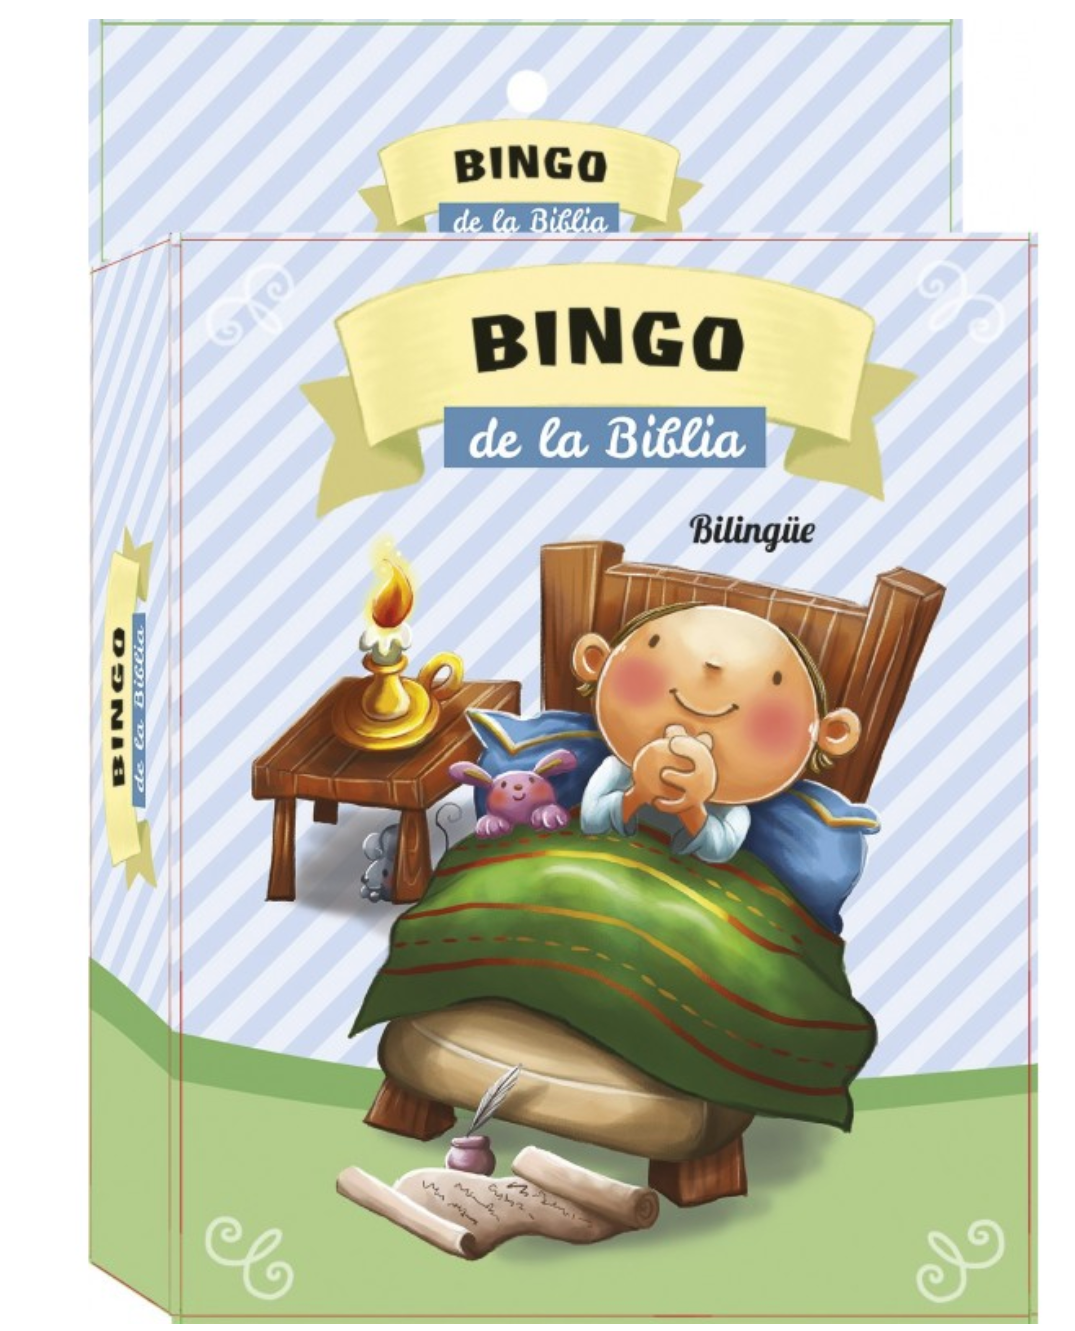 Bingo de la Biblia (Bilingüe) - Juego de Bingo